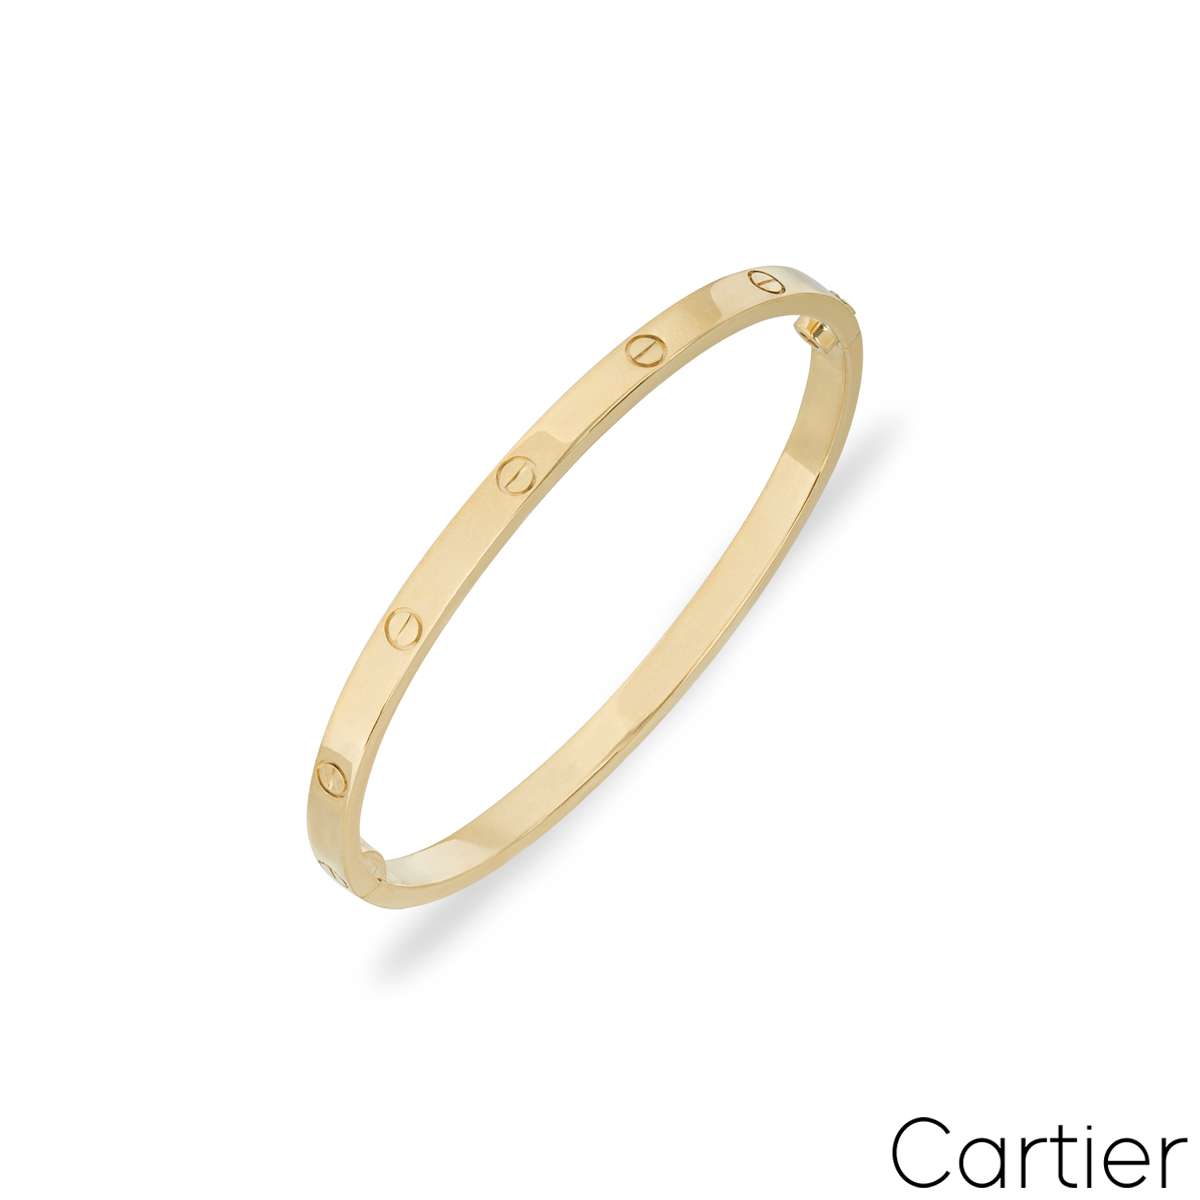 Cartier Yellow Gold Plain SM Love Bracelet Size 16 B6047516